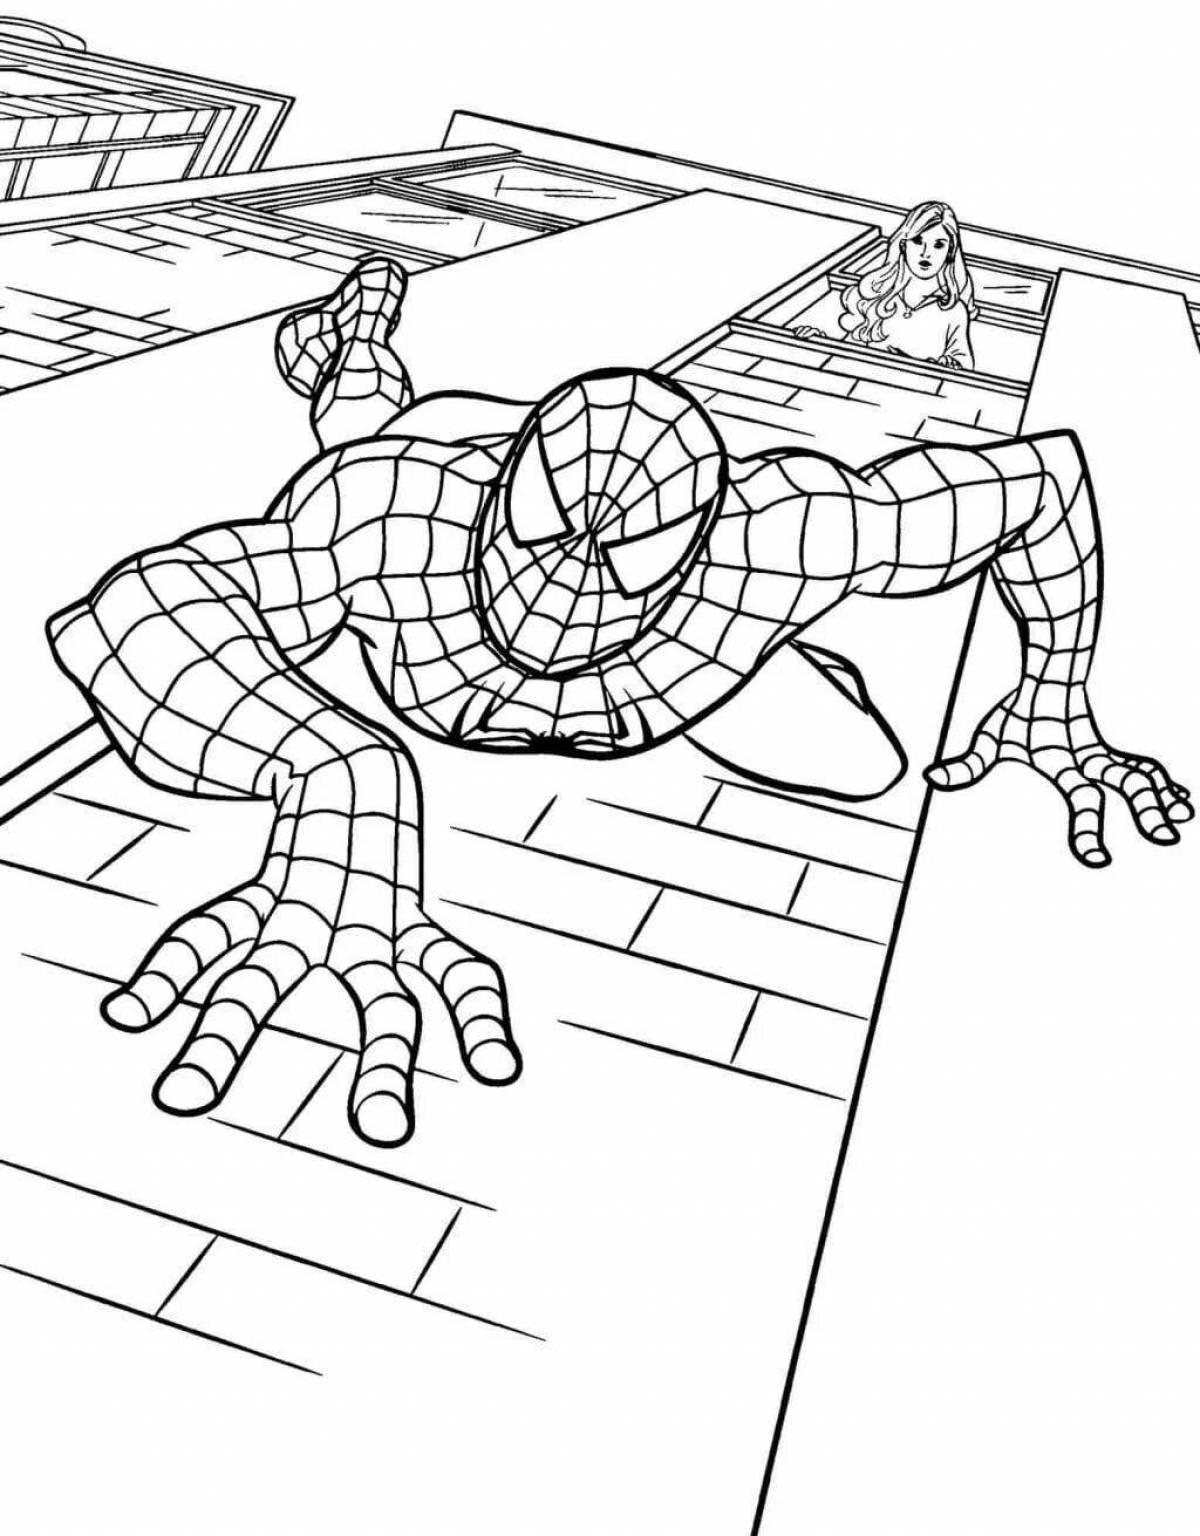 Fantastic Spiderman Coloring Page